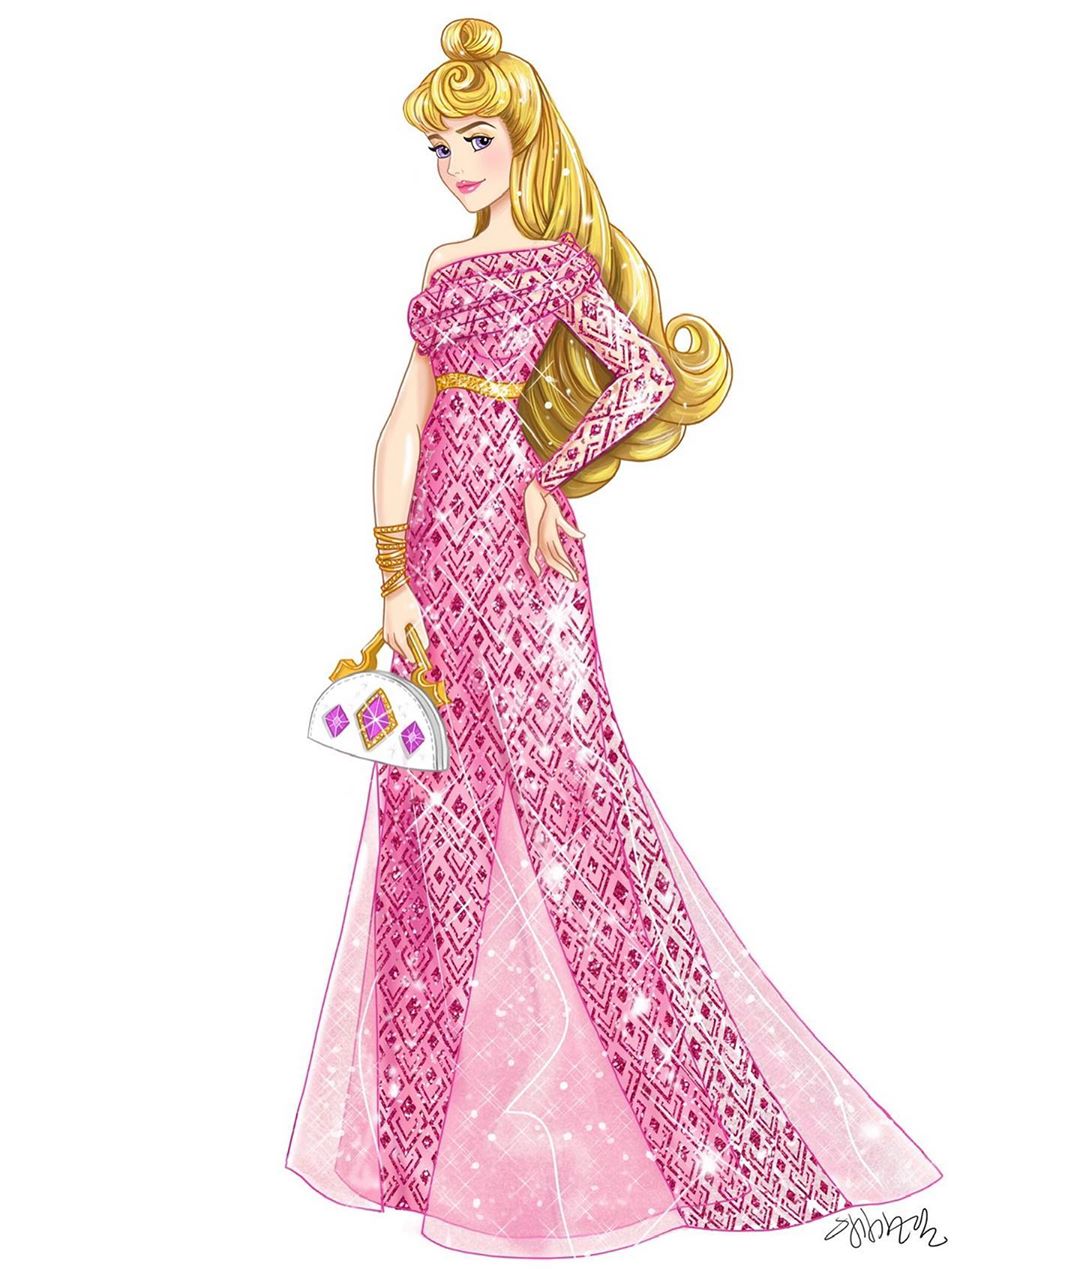 Beautiful concept art for Disney Princess Style series